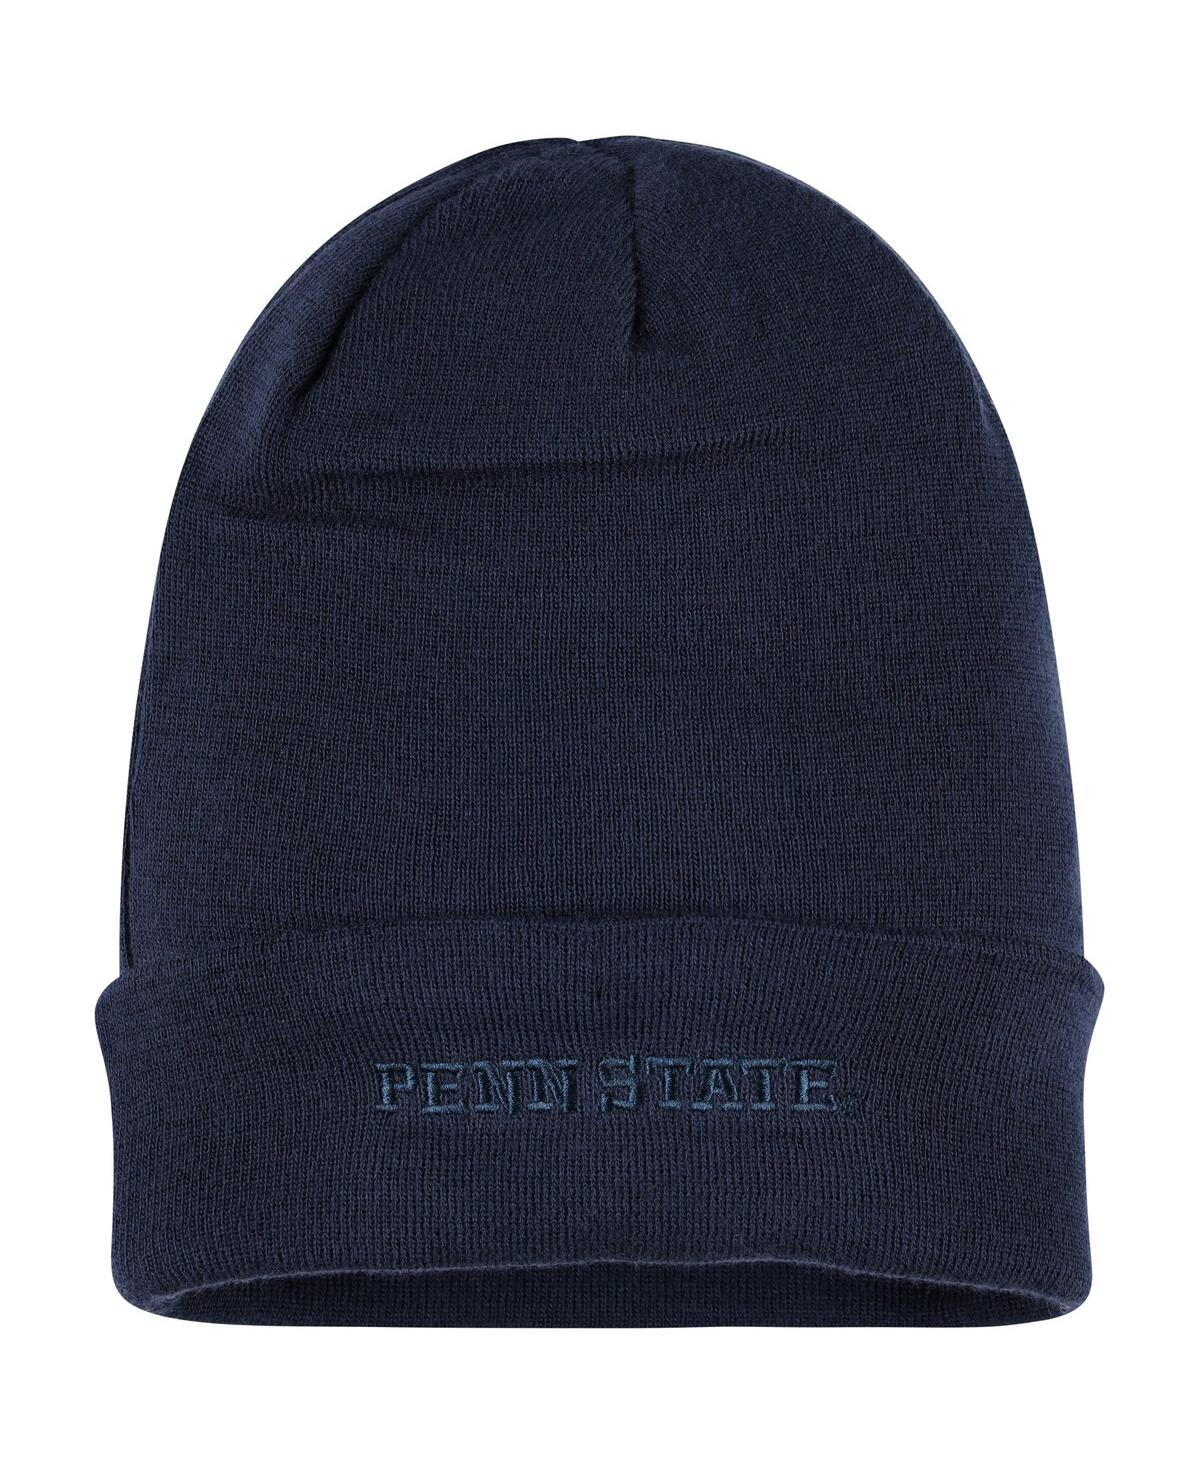 Shop Nike Men's  Navy Penn State Nittany Lions Tonal Cuffed Knit Hat